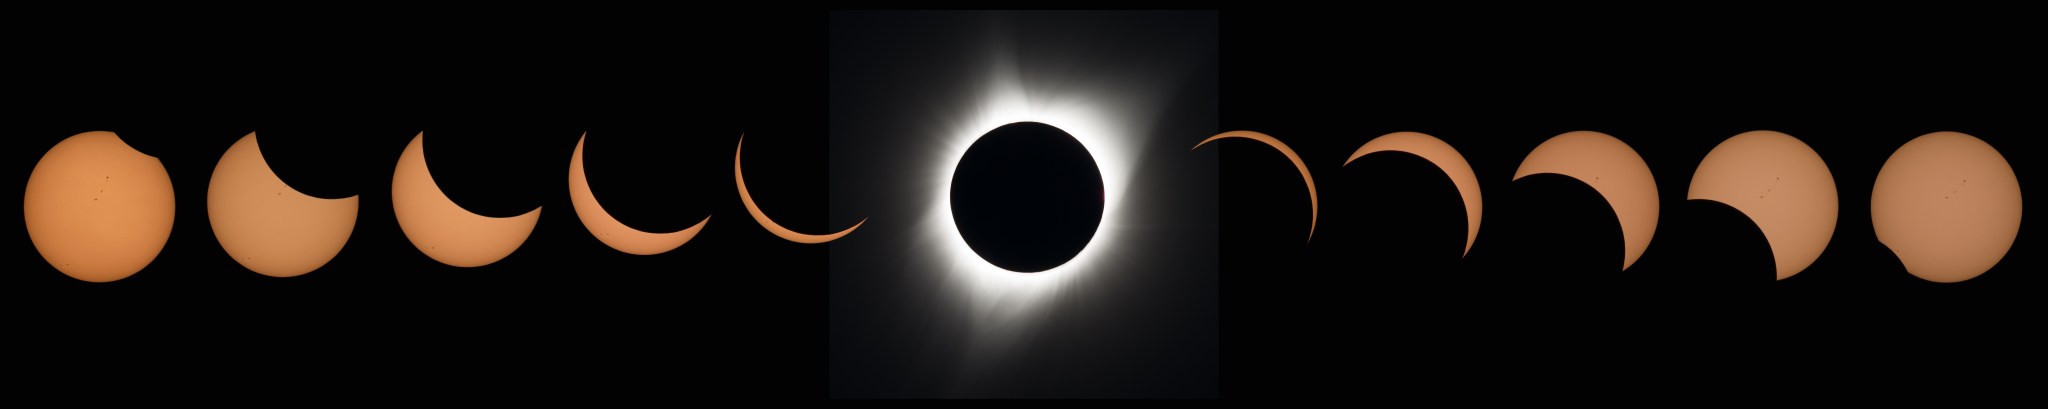 composite of eleven eclipse images